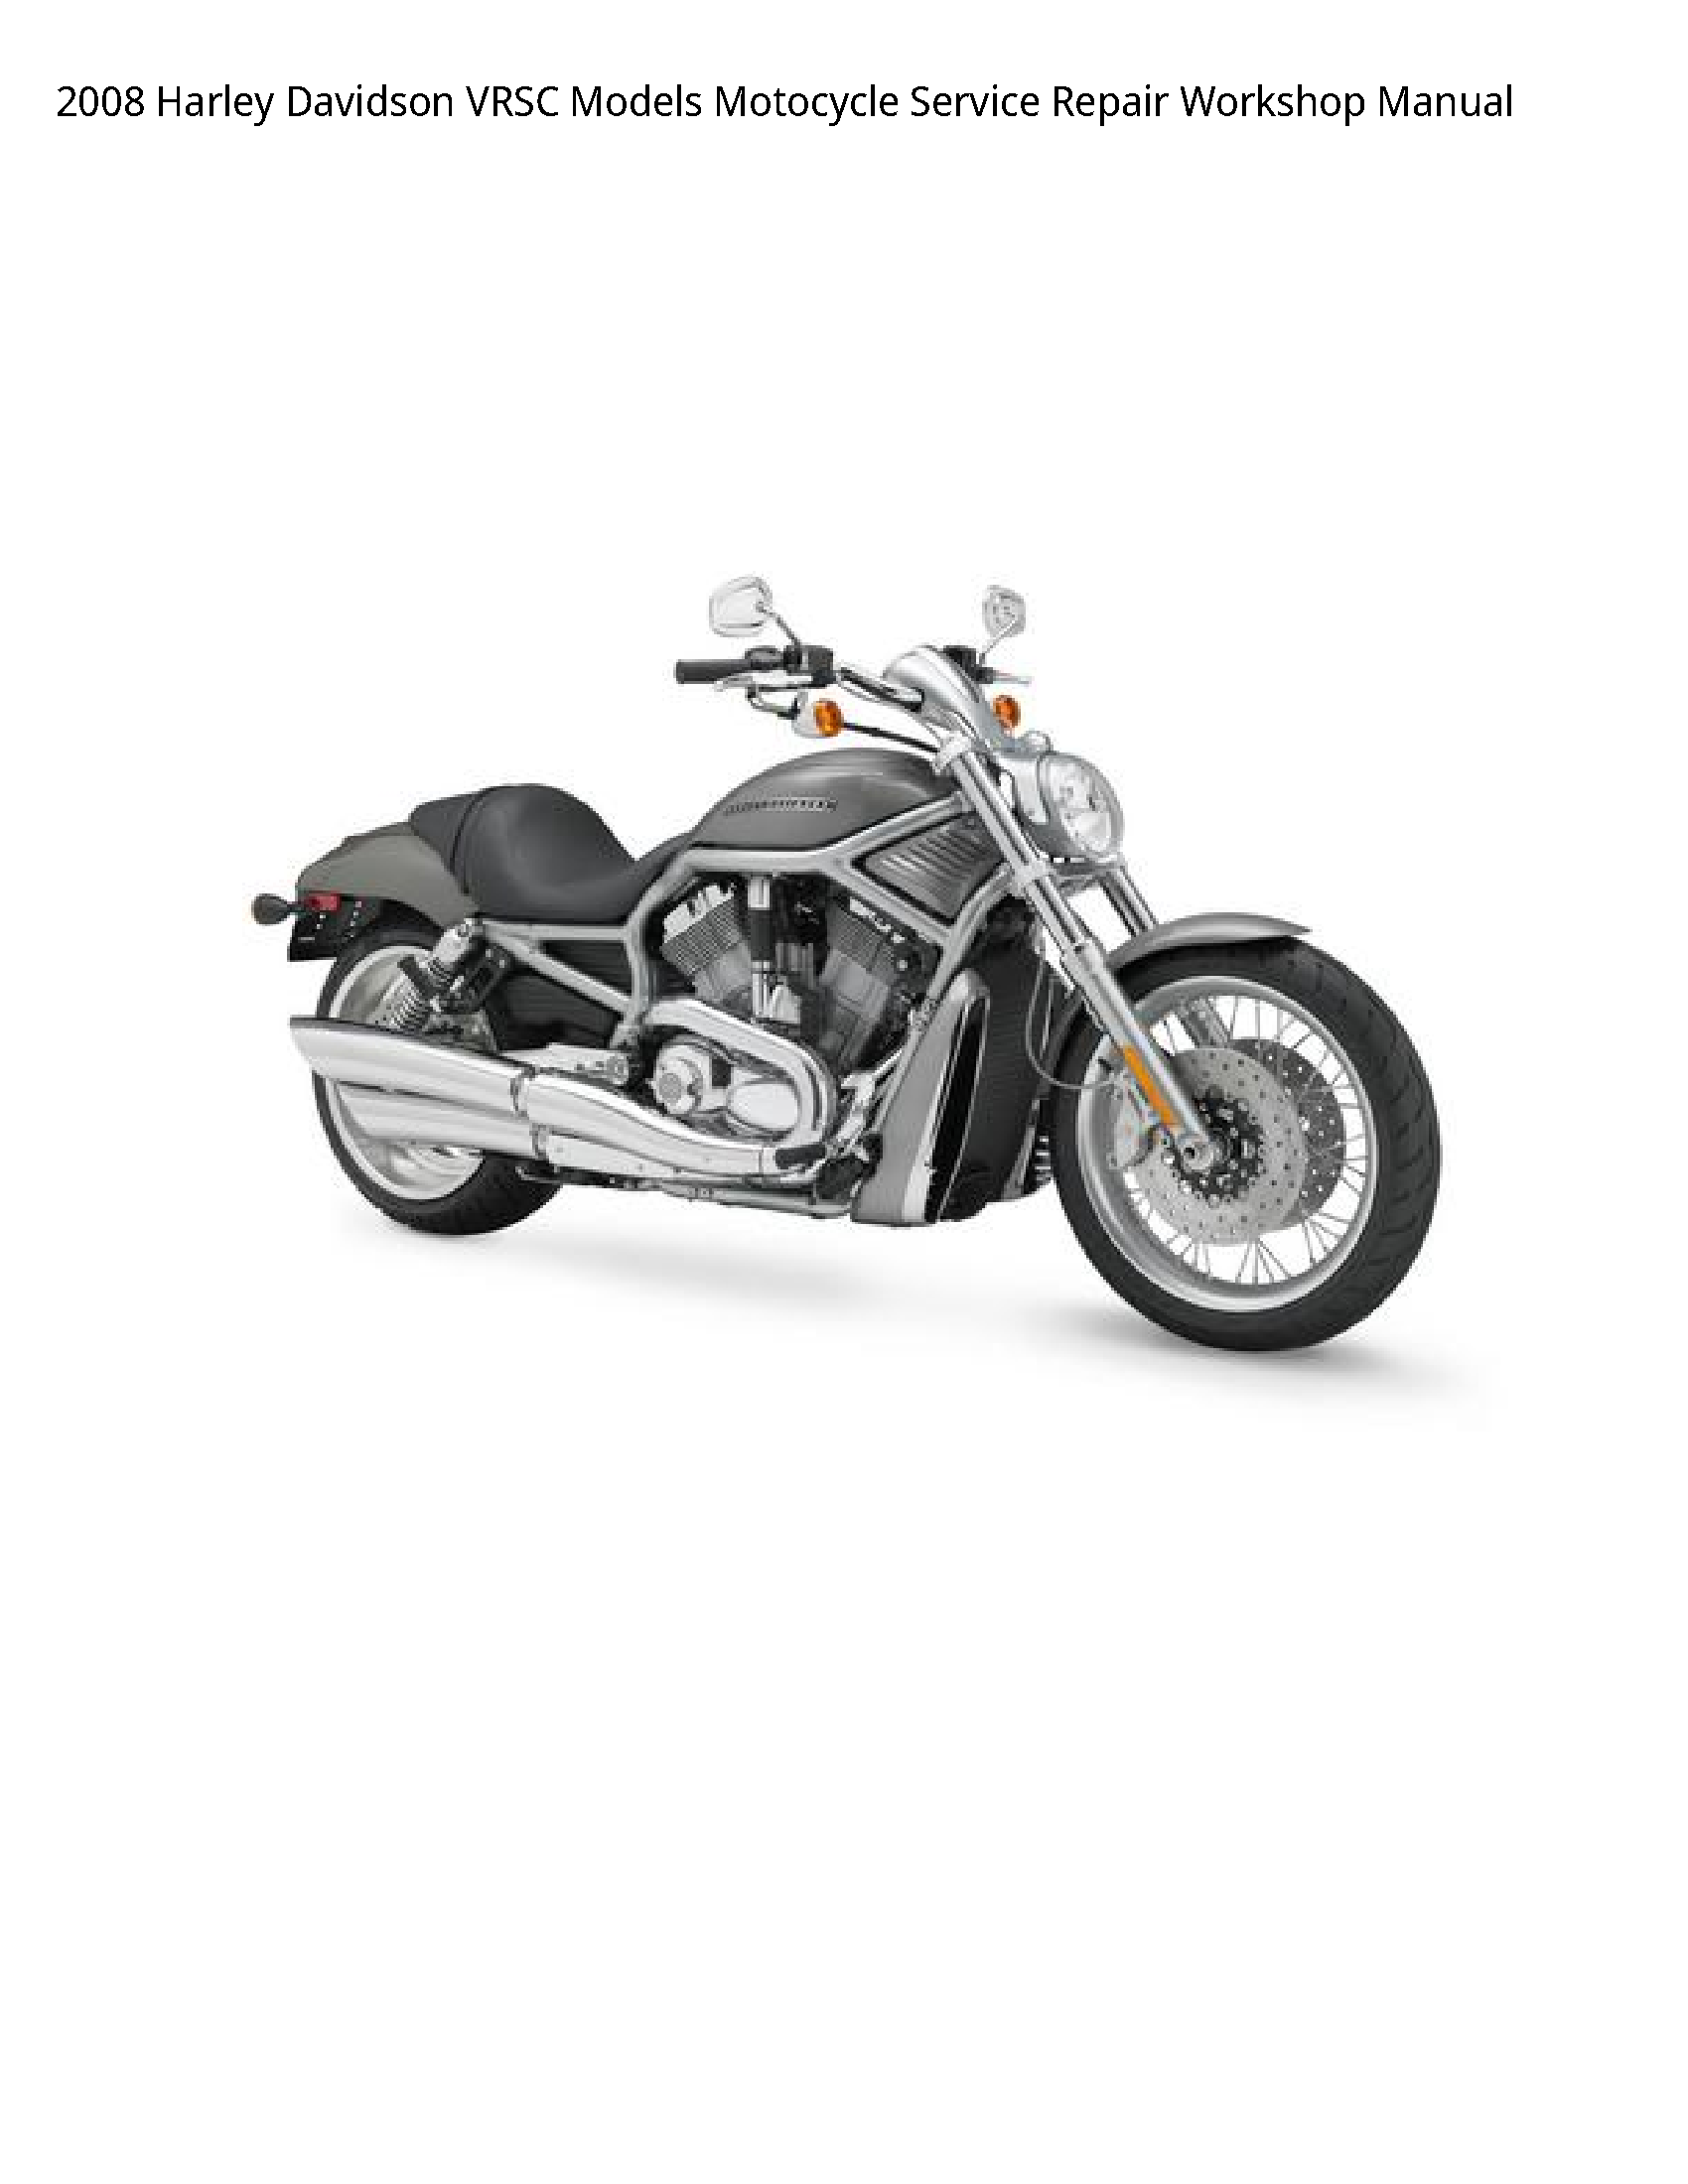 Harley Davidson VRSC Motocycle manual